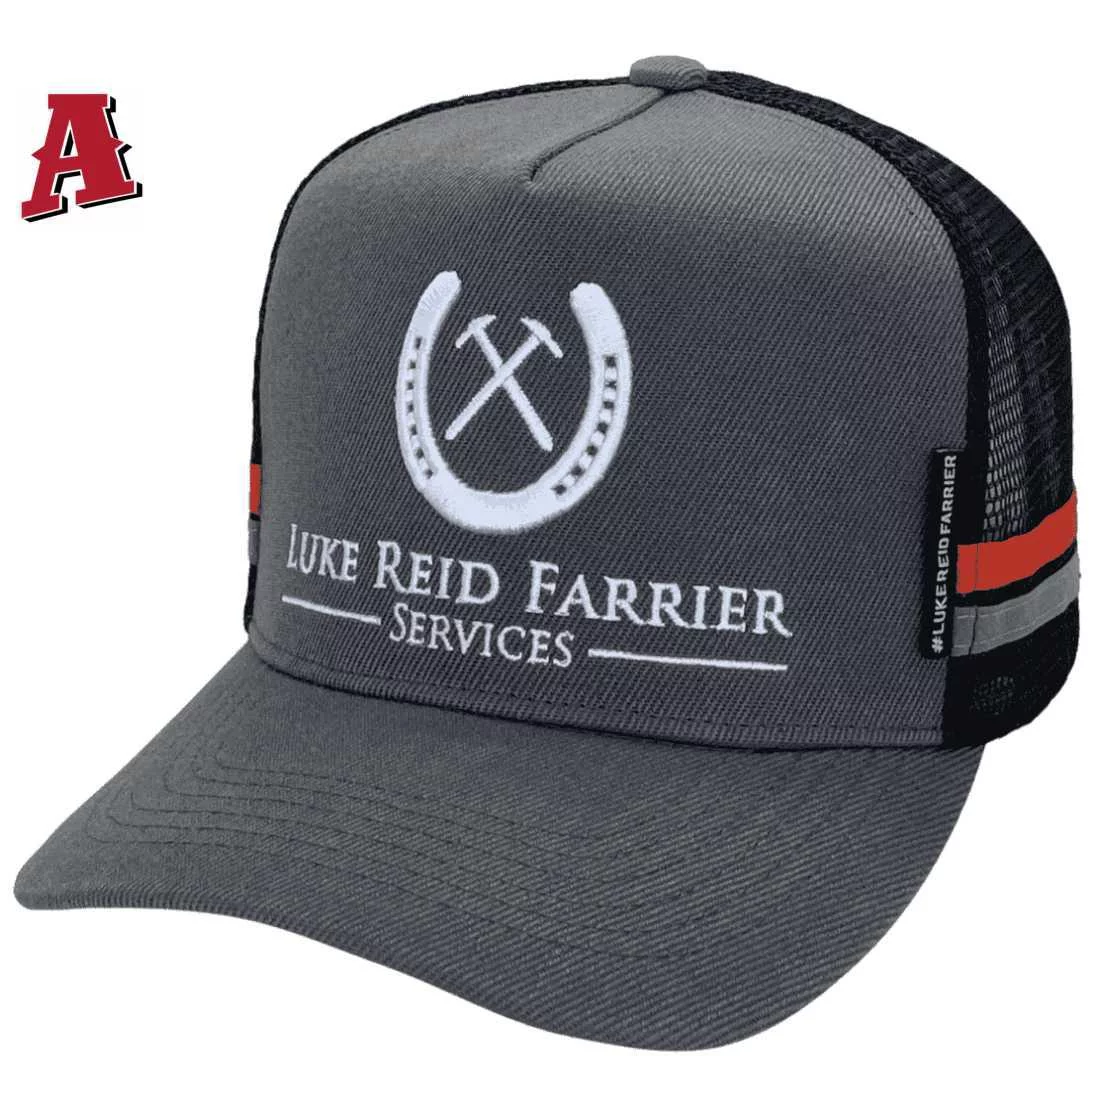 Luke Reid Farrier Services Serpentine/Jarrahdale Perth WA HP Midrange Aussie Trucker Hat with Australian Head Fit Crown and Double Sidebands -Grey Black Red